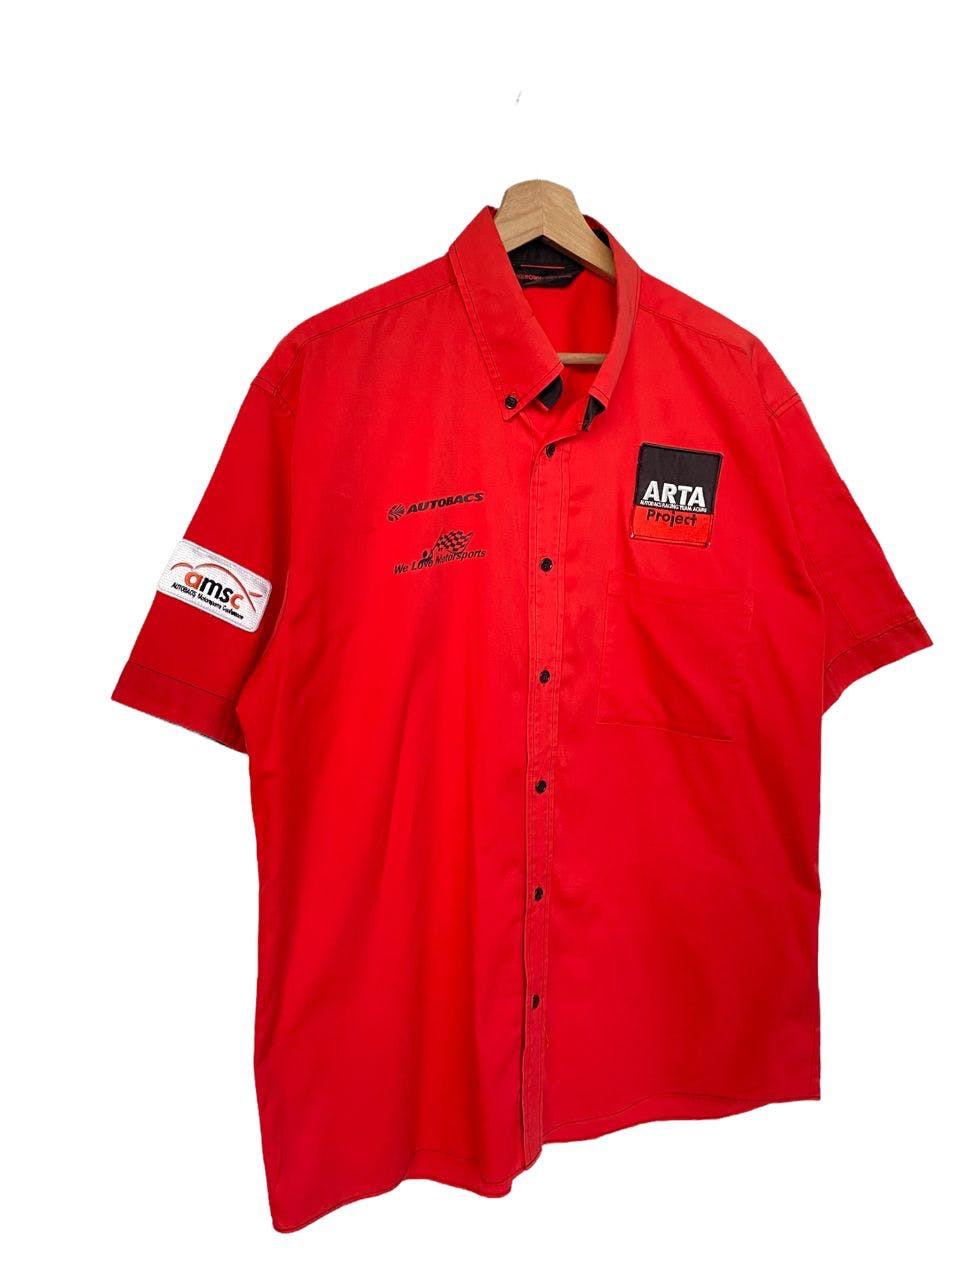 Workers - Nice Autobacs Racing Team Arta Project Shirt - 3